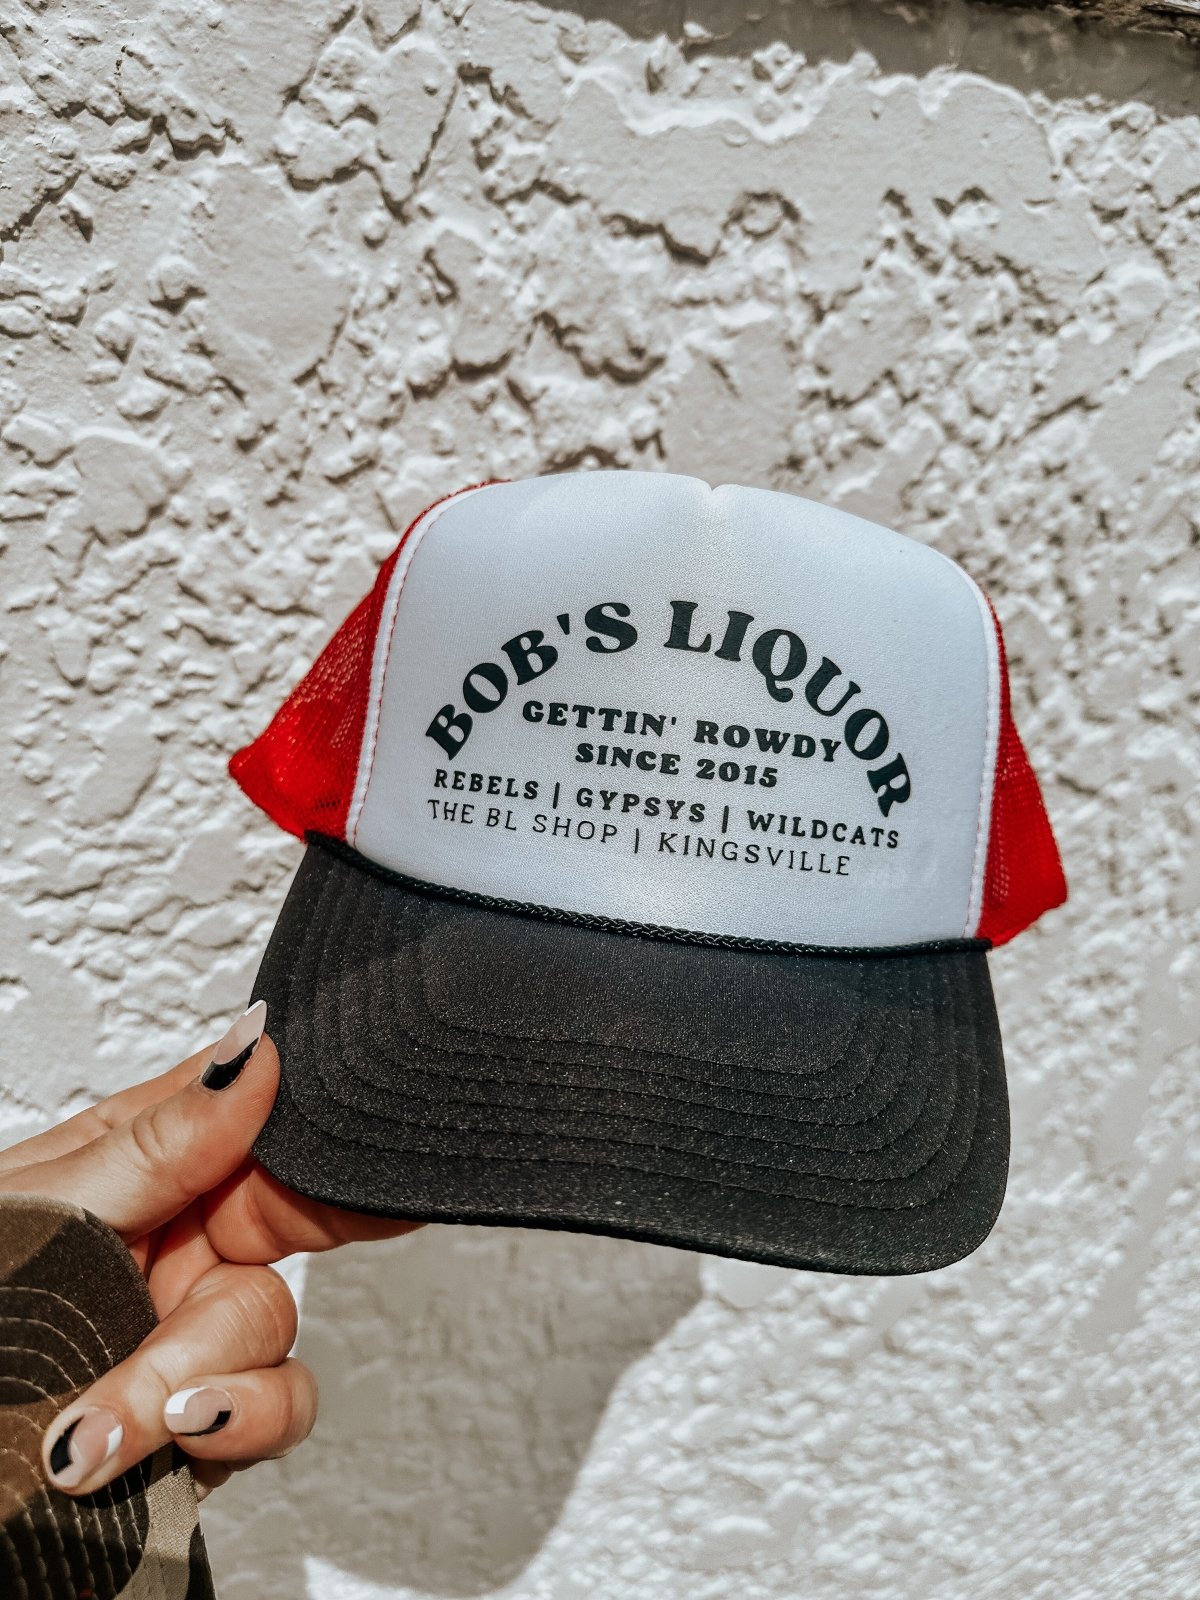 Bob's Liquior Hat - trucker hat